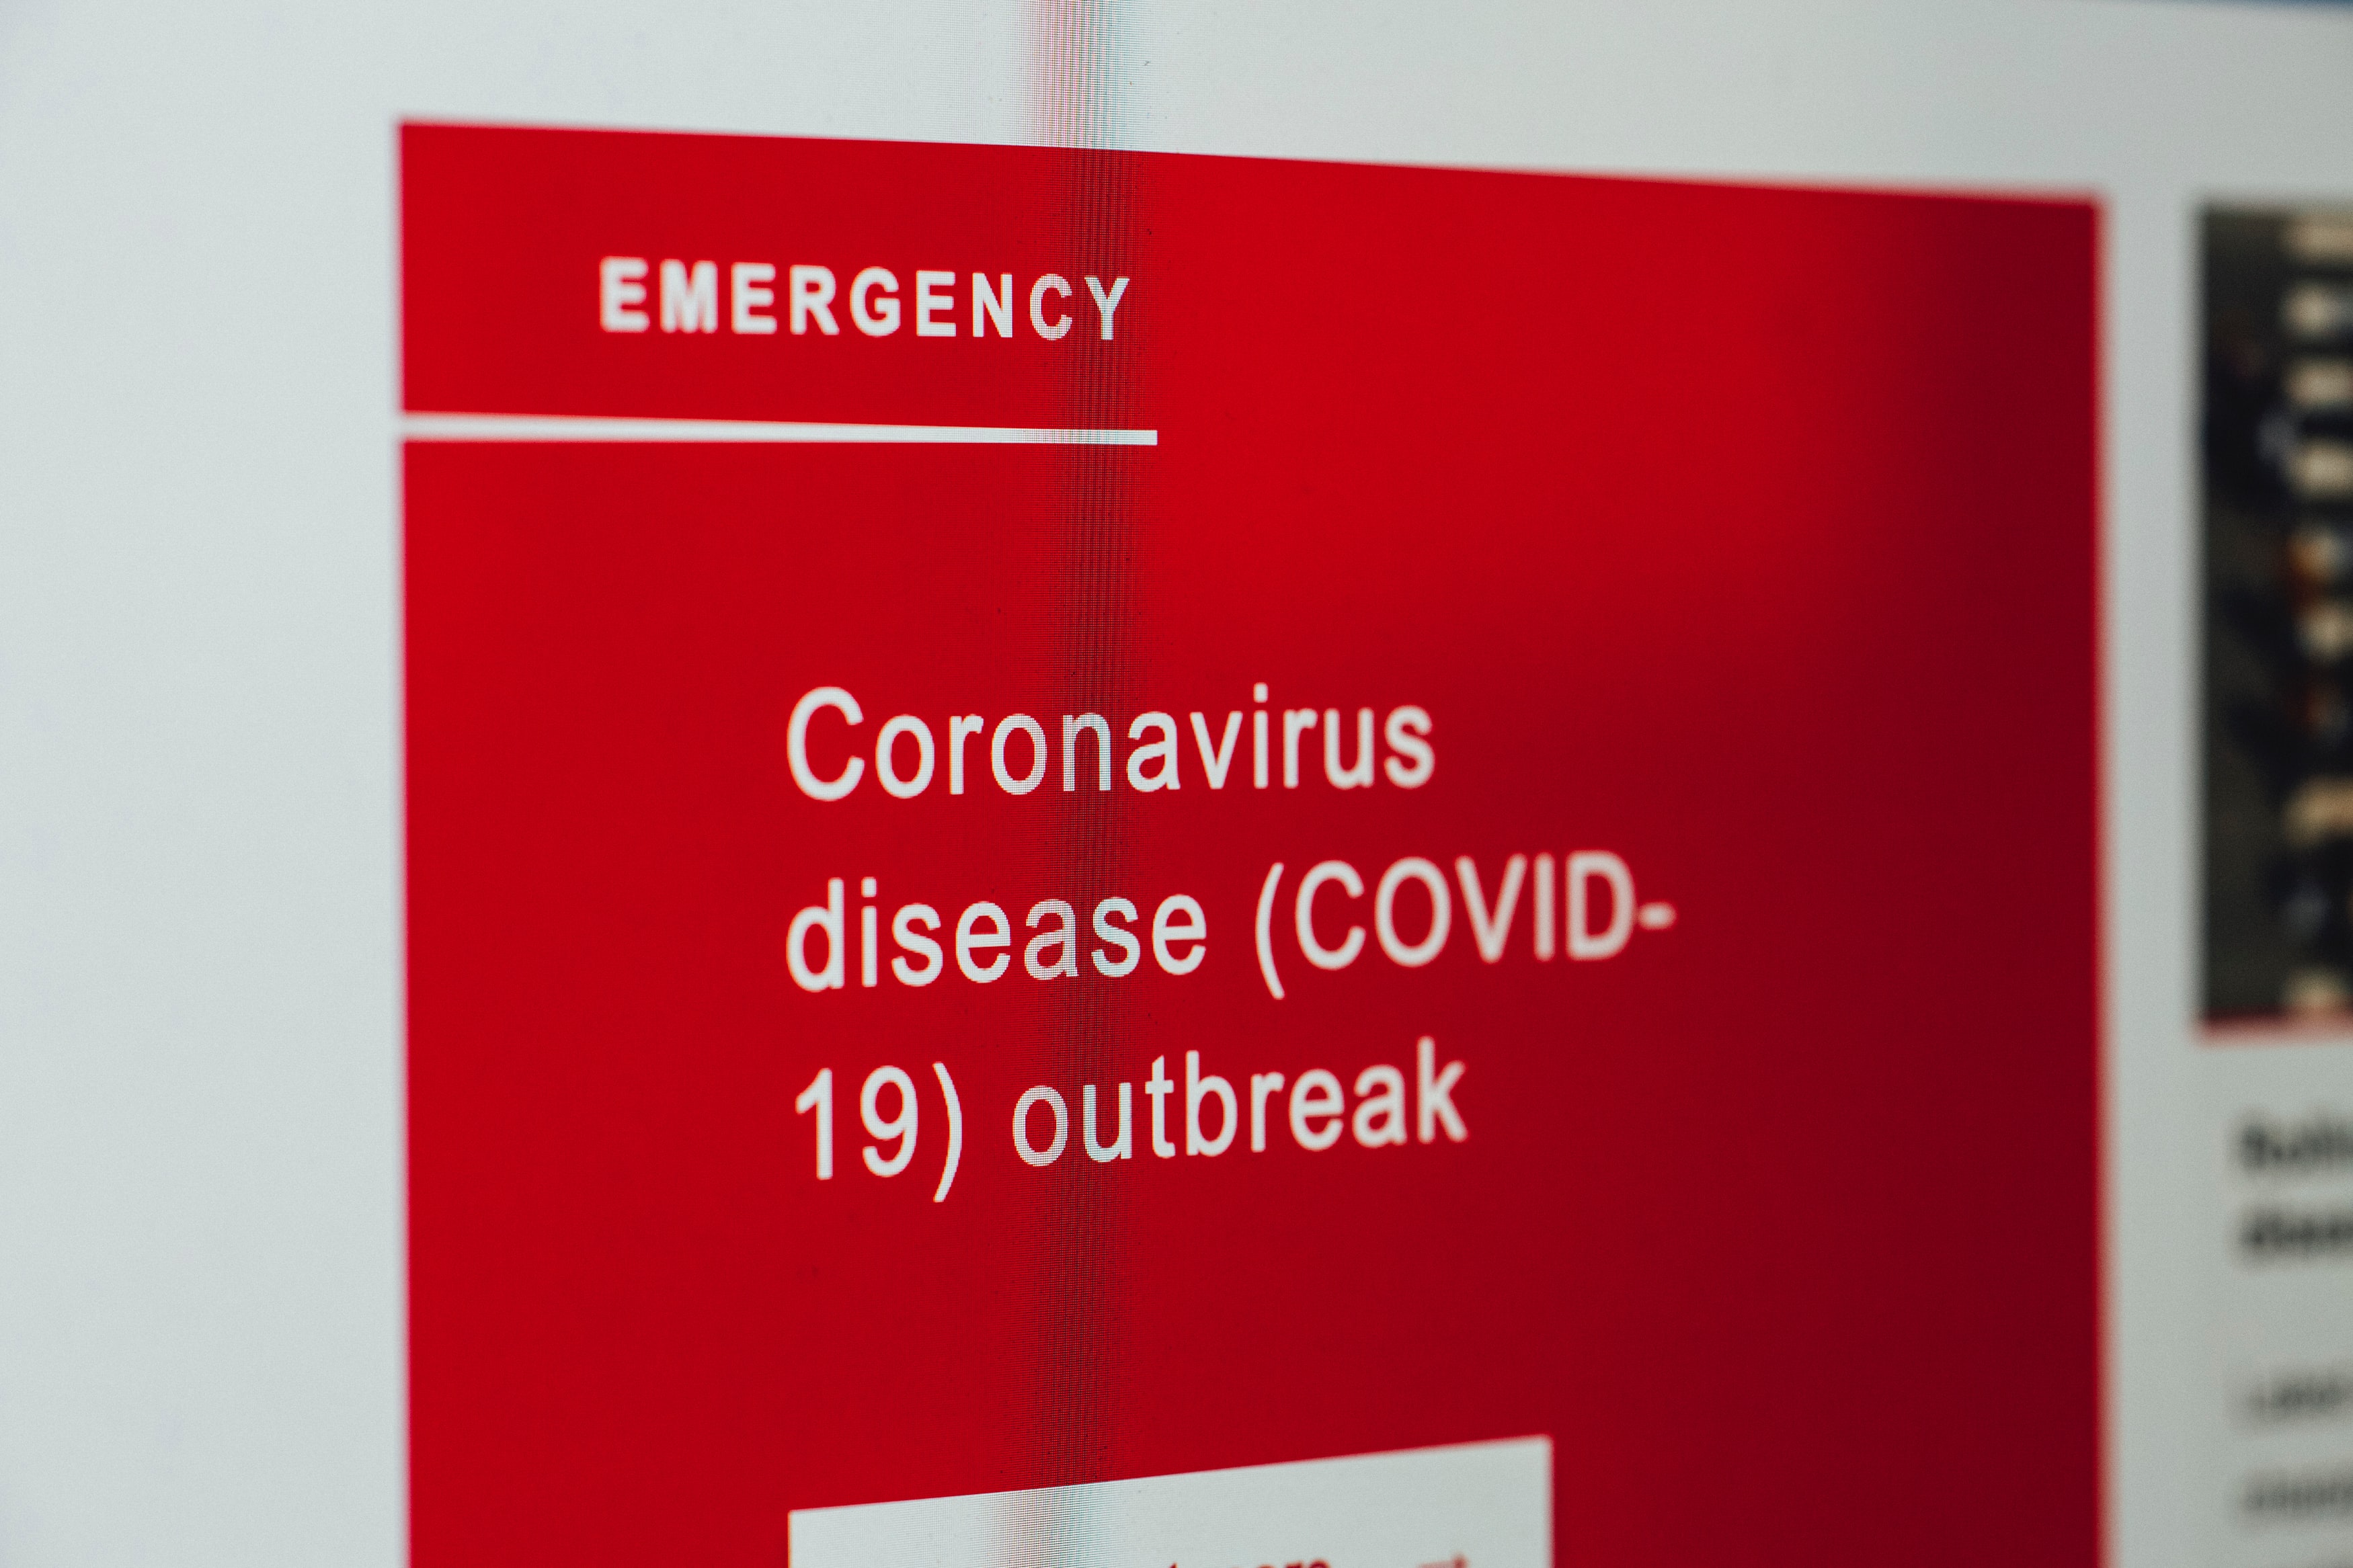 Coronavirus emergency message, photo by Markus Spiske on Unsplash